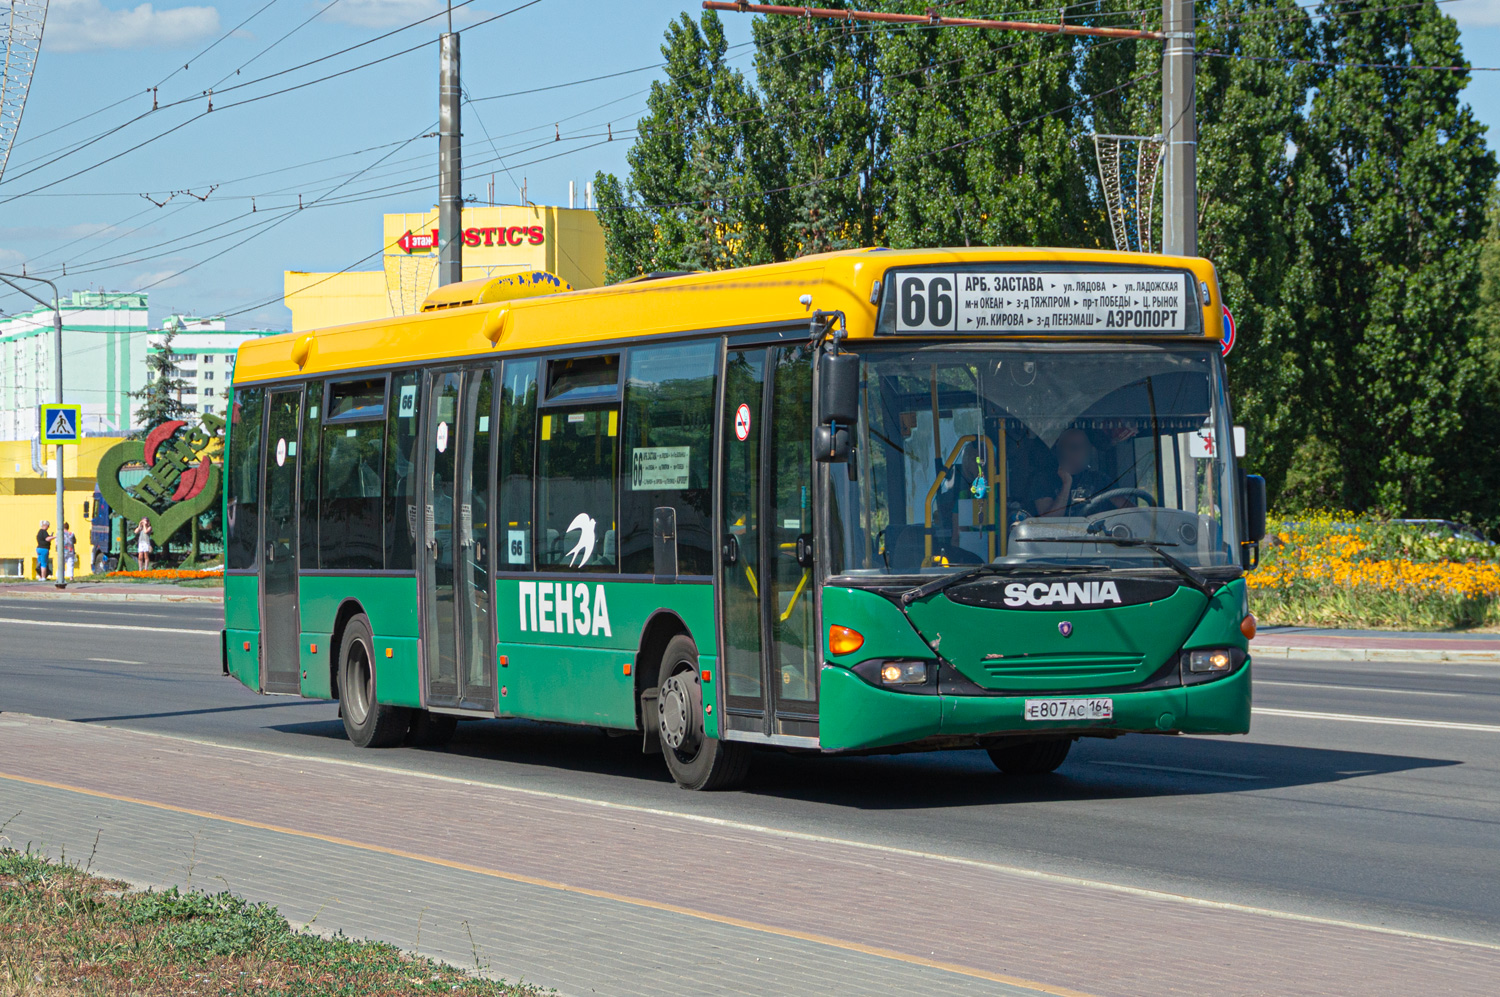 Penza region, Scania OmniLink I (Scania-St.Petersburg) № Е 807 АС 164